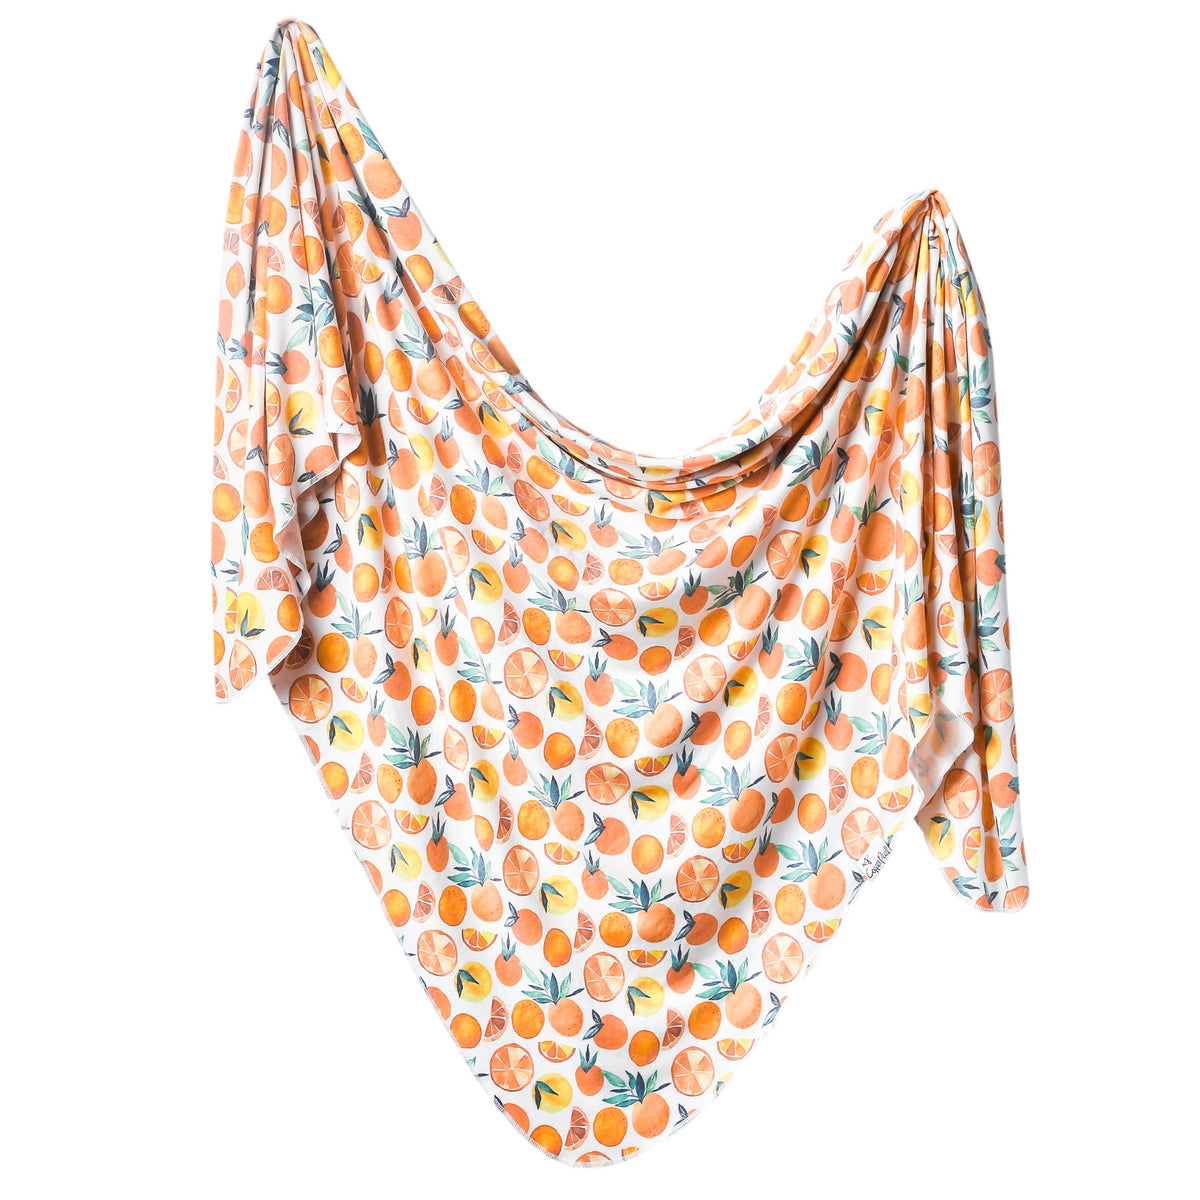 Copper Pearl Knit Swaddle Blanket "Citrus"